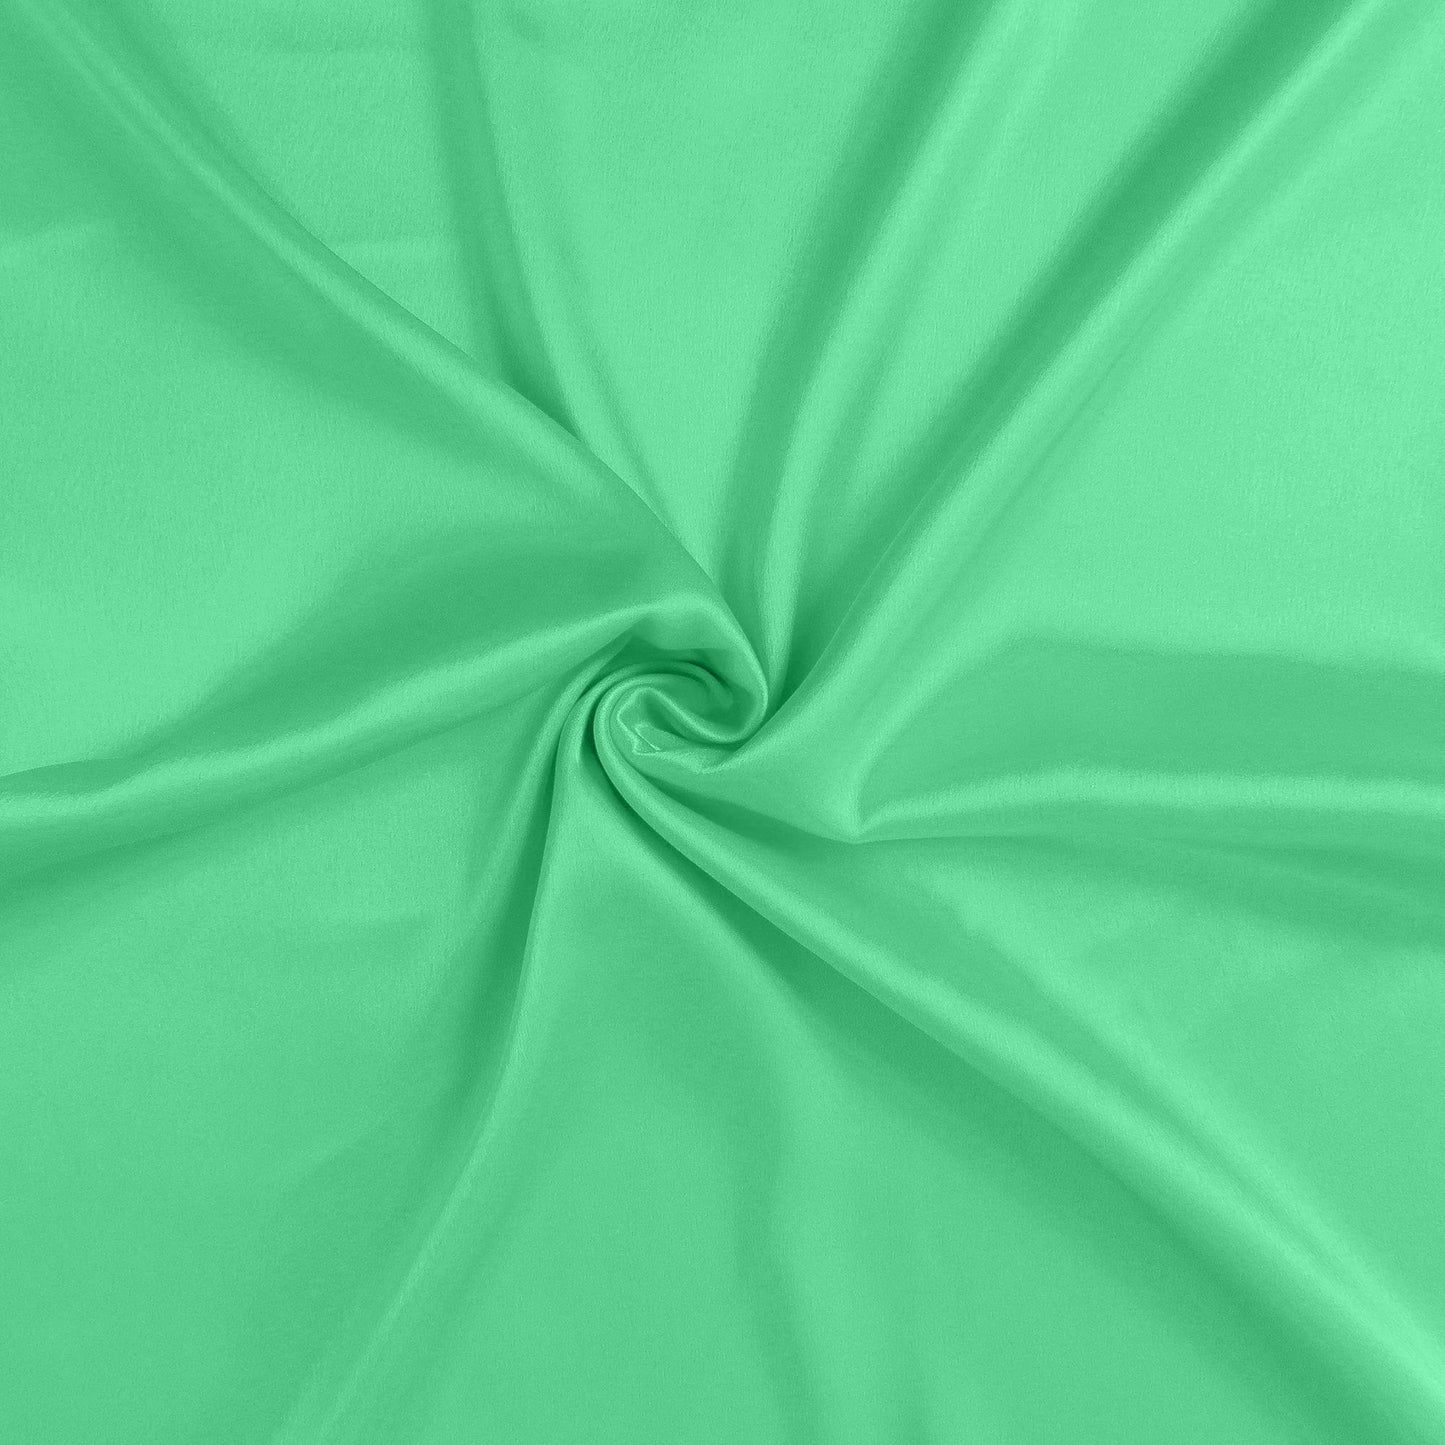 Luxury Soft Plain Satin Silk Pillowcases in Set of 2 - Pool Green